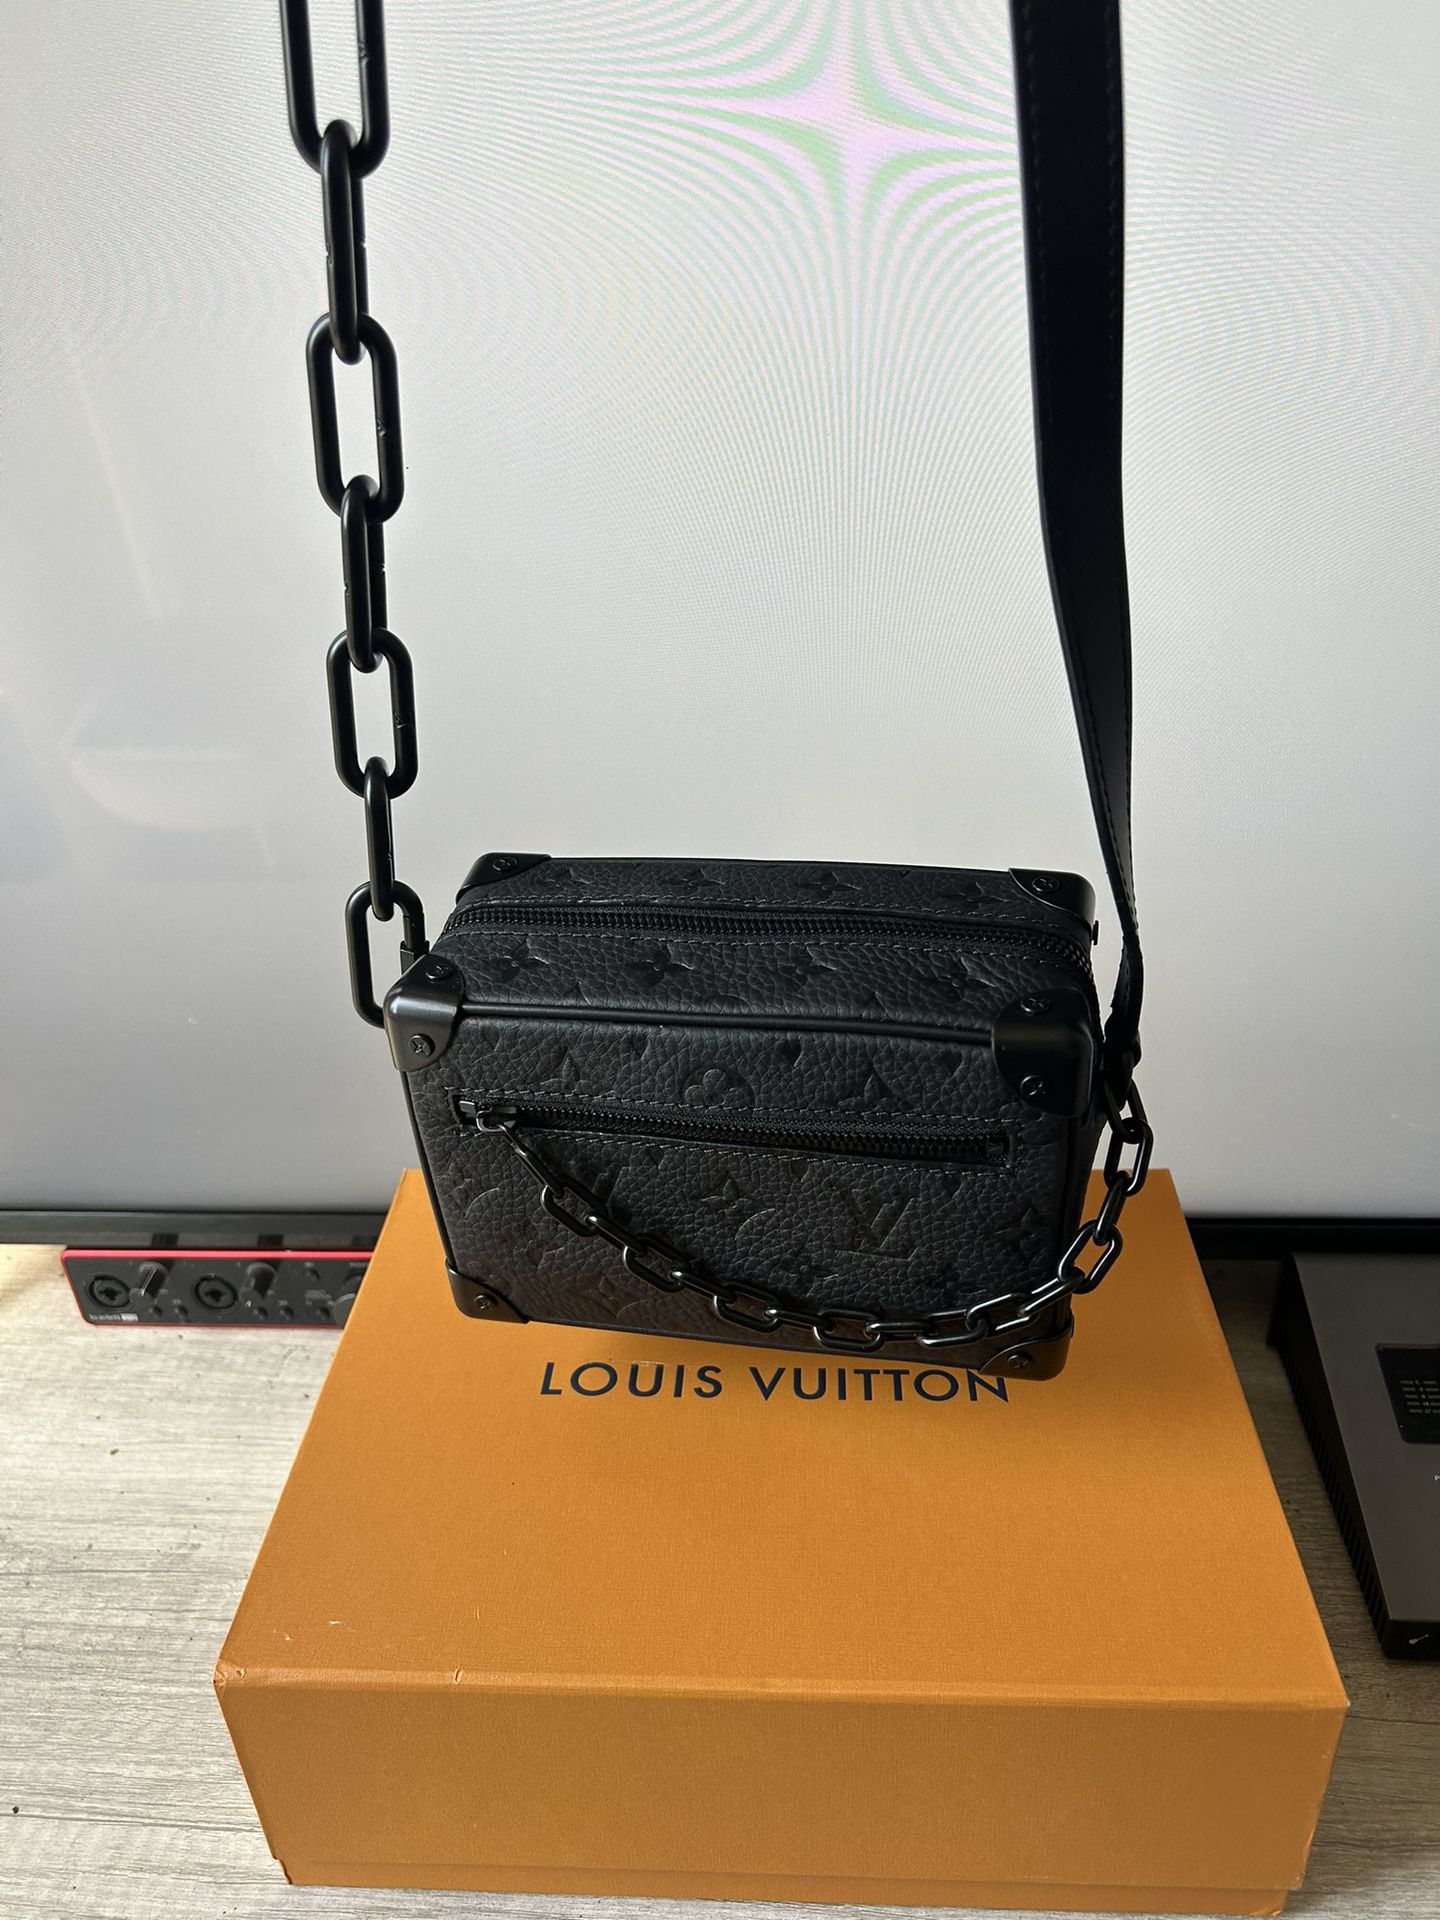 Louis Vuitton Monogram Soft Trunk Purse for Sale in Murrieta, CA - OfferUp